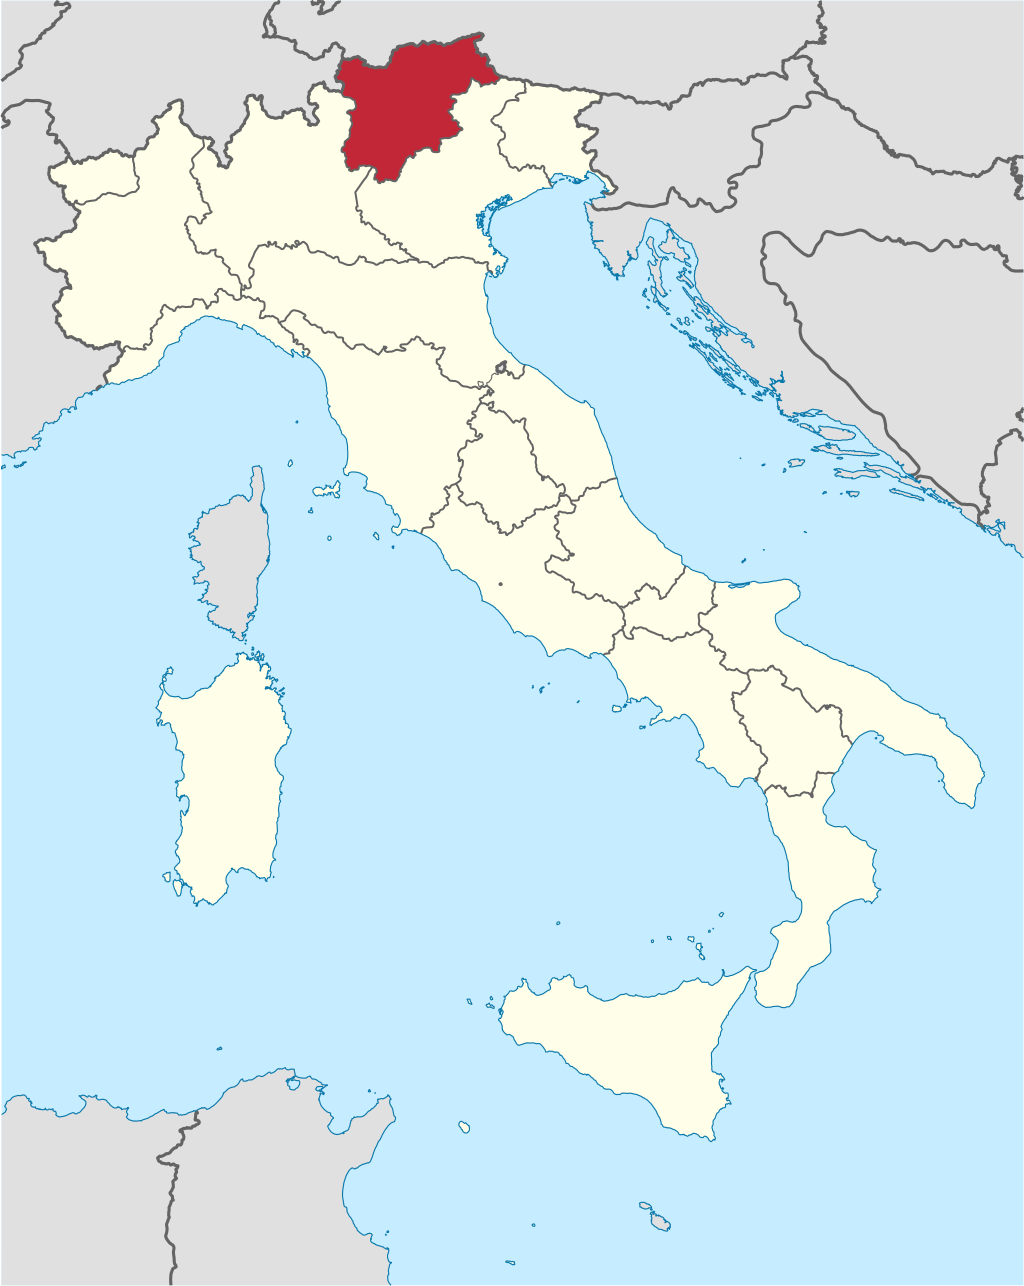 Restorante Hotel Ponale Urbex location or around the region Trentino Alto Adige (Trentino), Italy